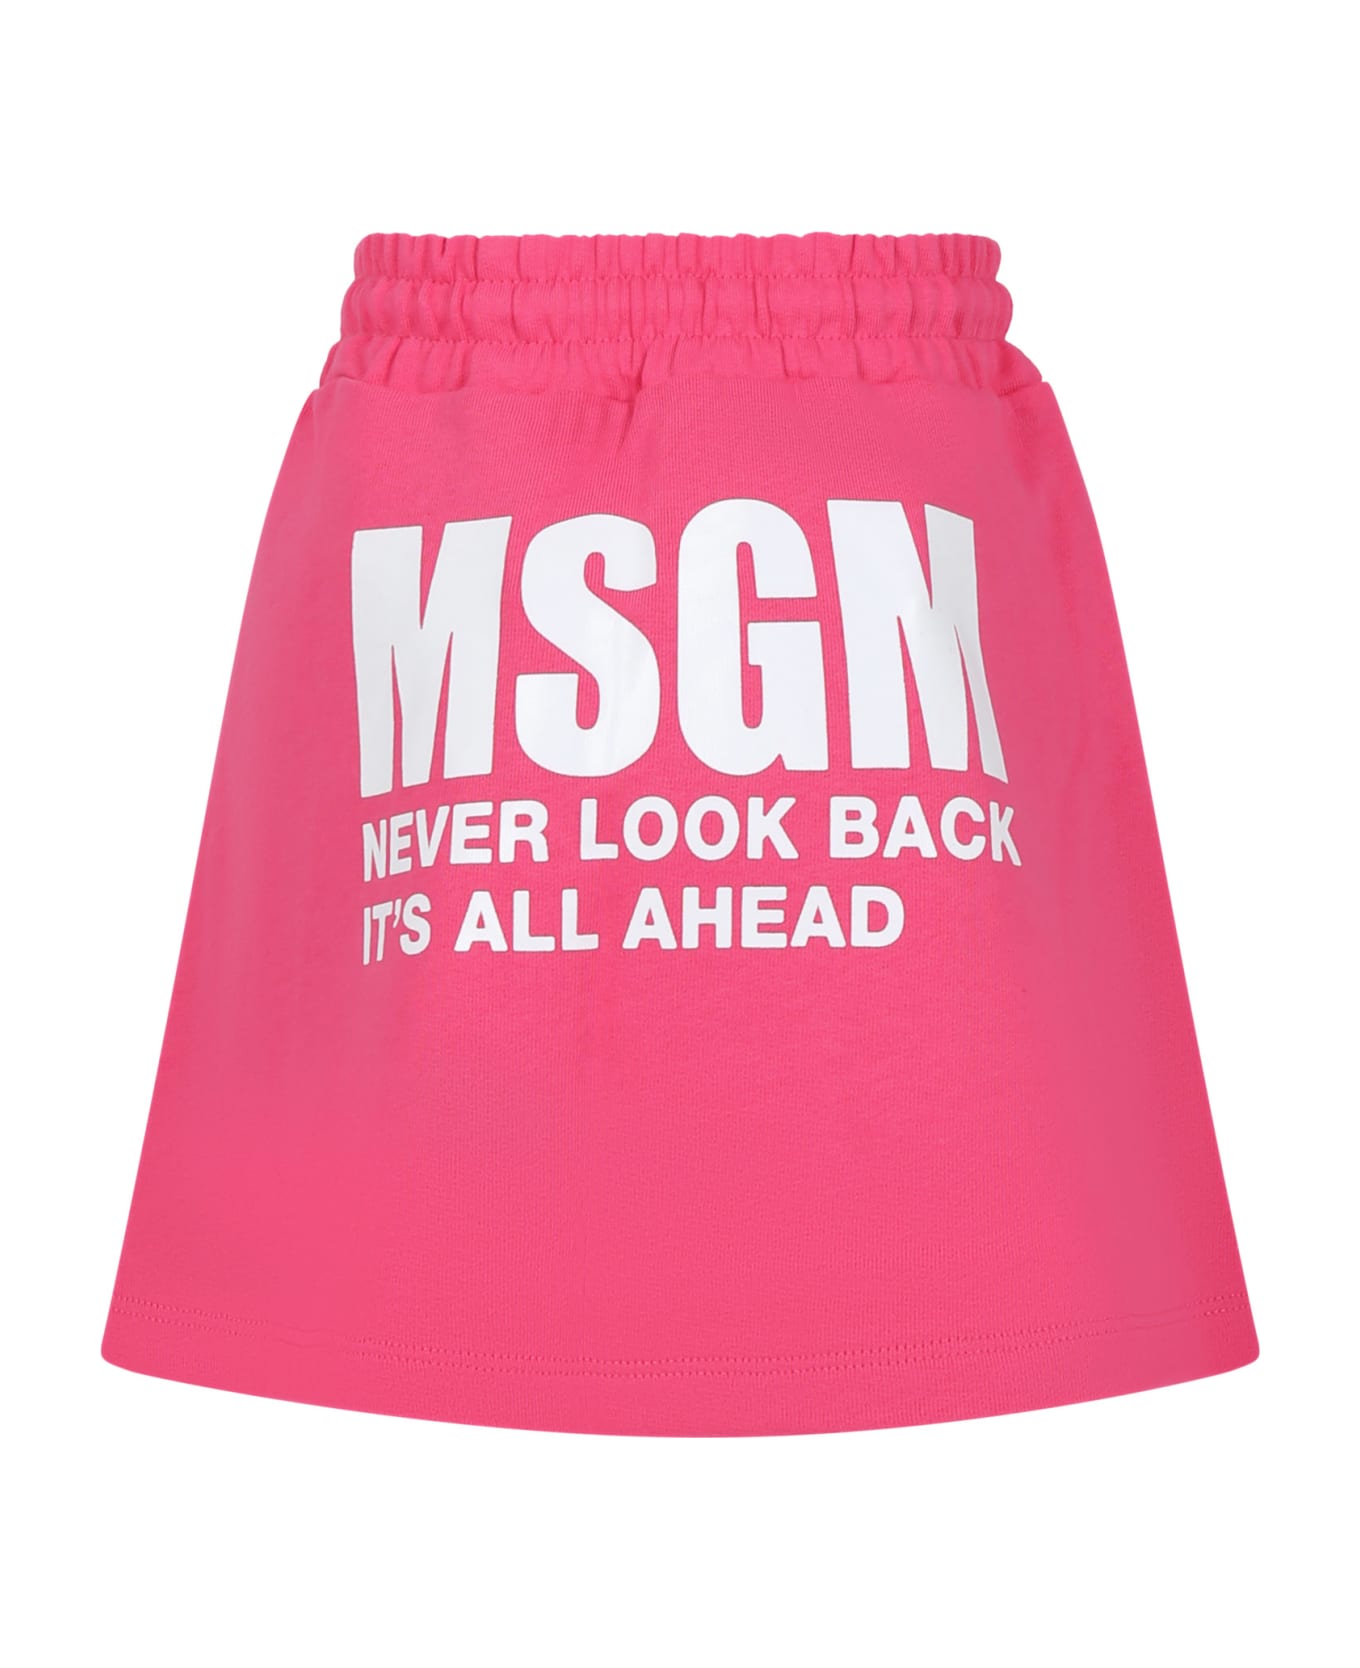 MSGM Fuchsia Skirt For Girl With Logo And Writing - Fuchsia